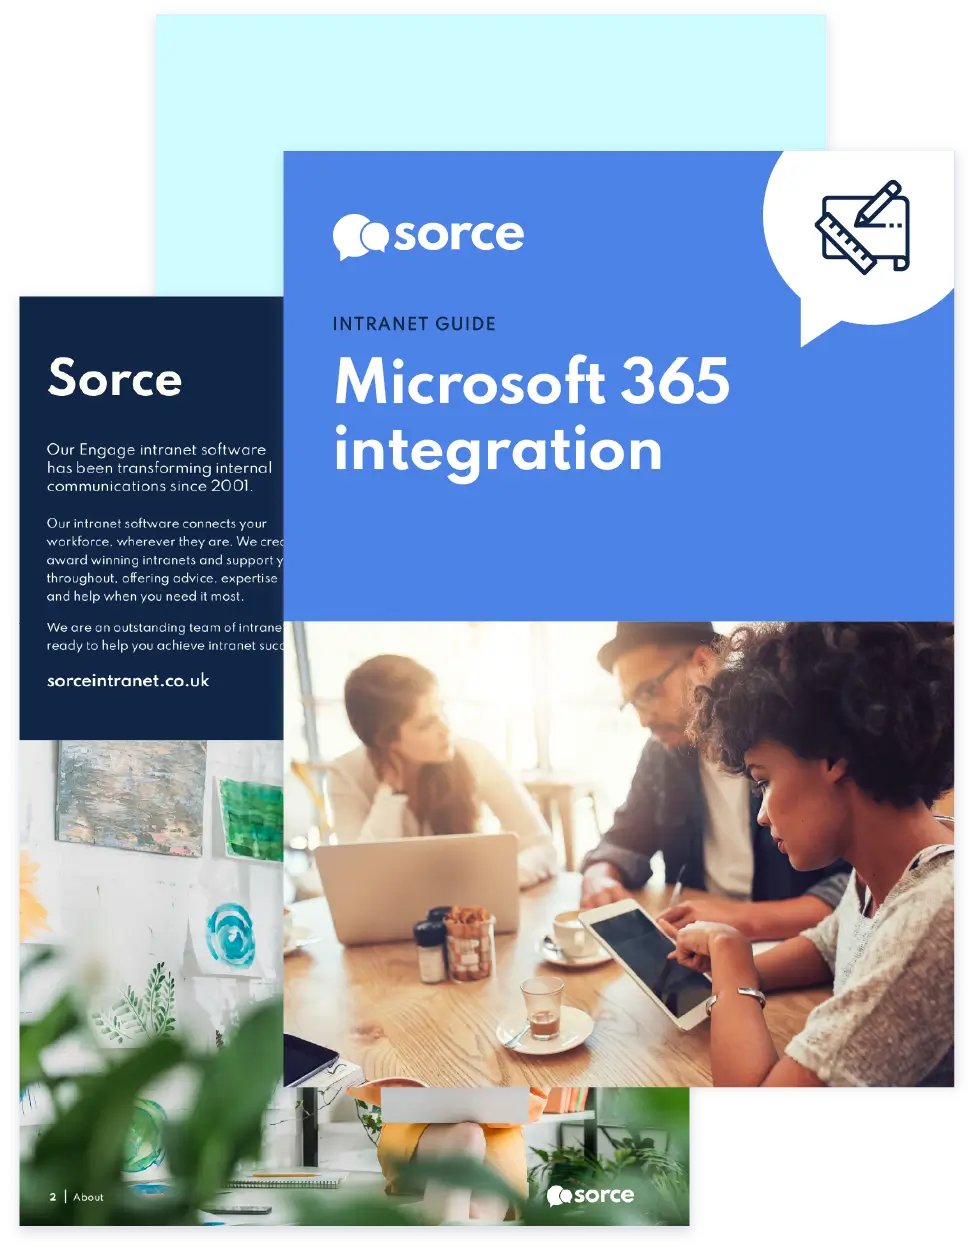 Engage intranet software Microsoft 365 integration